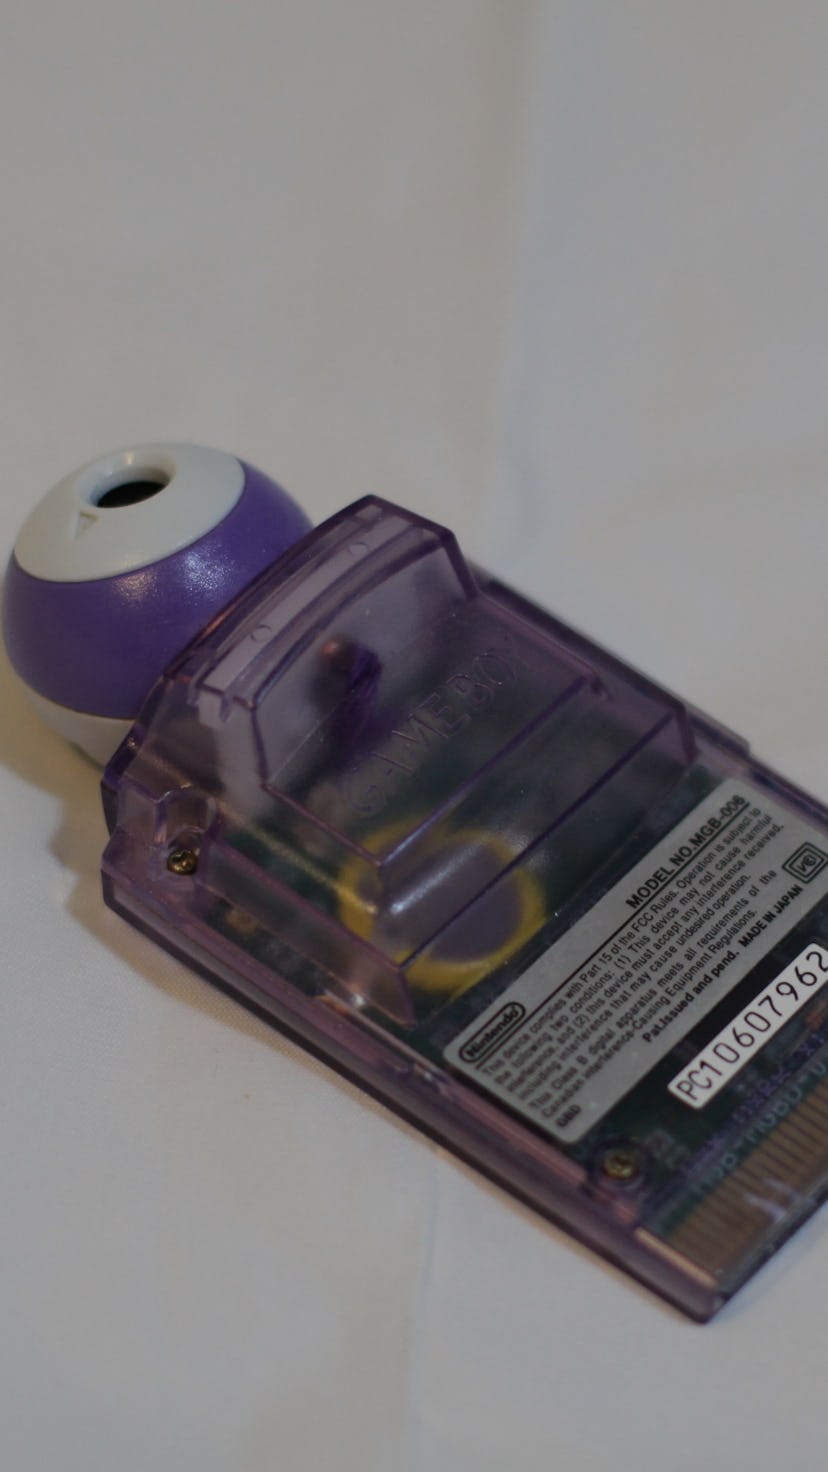 Atomic Purple Game Boy Camera owned by Herr Zatacke